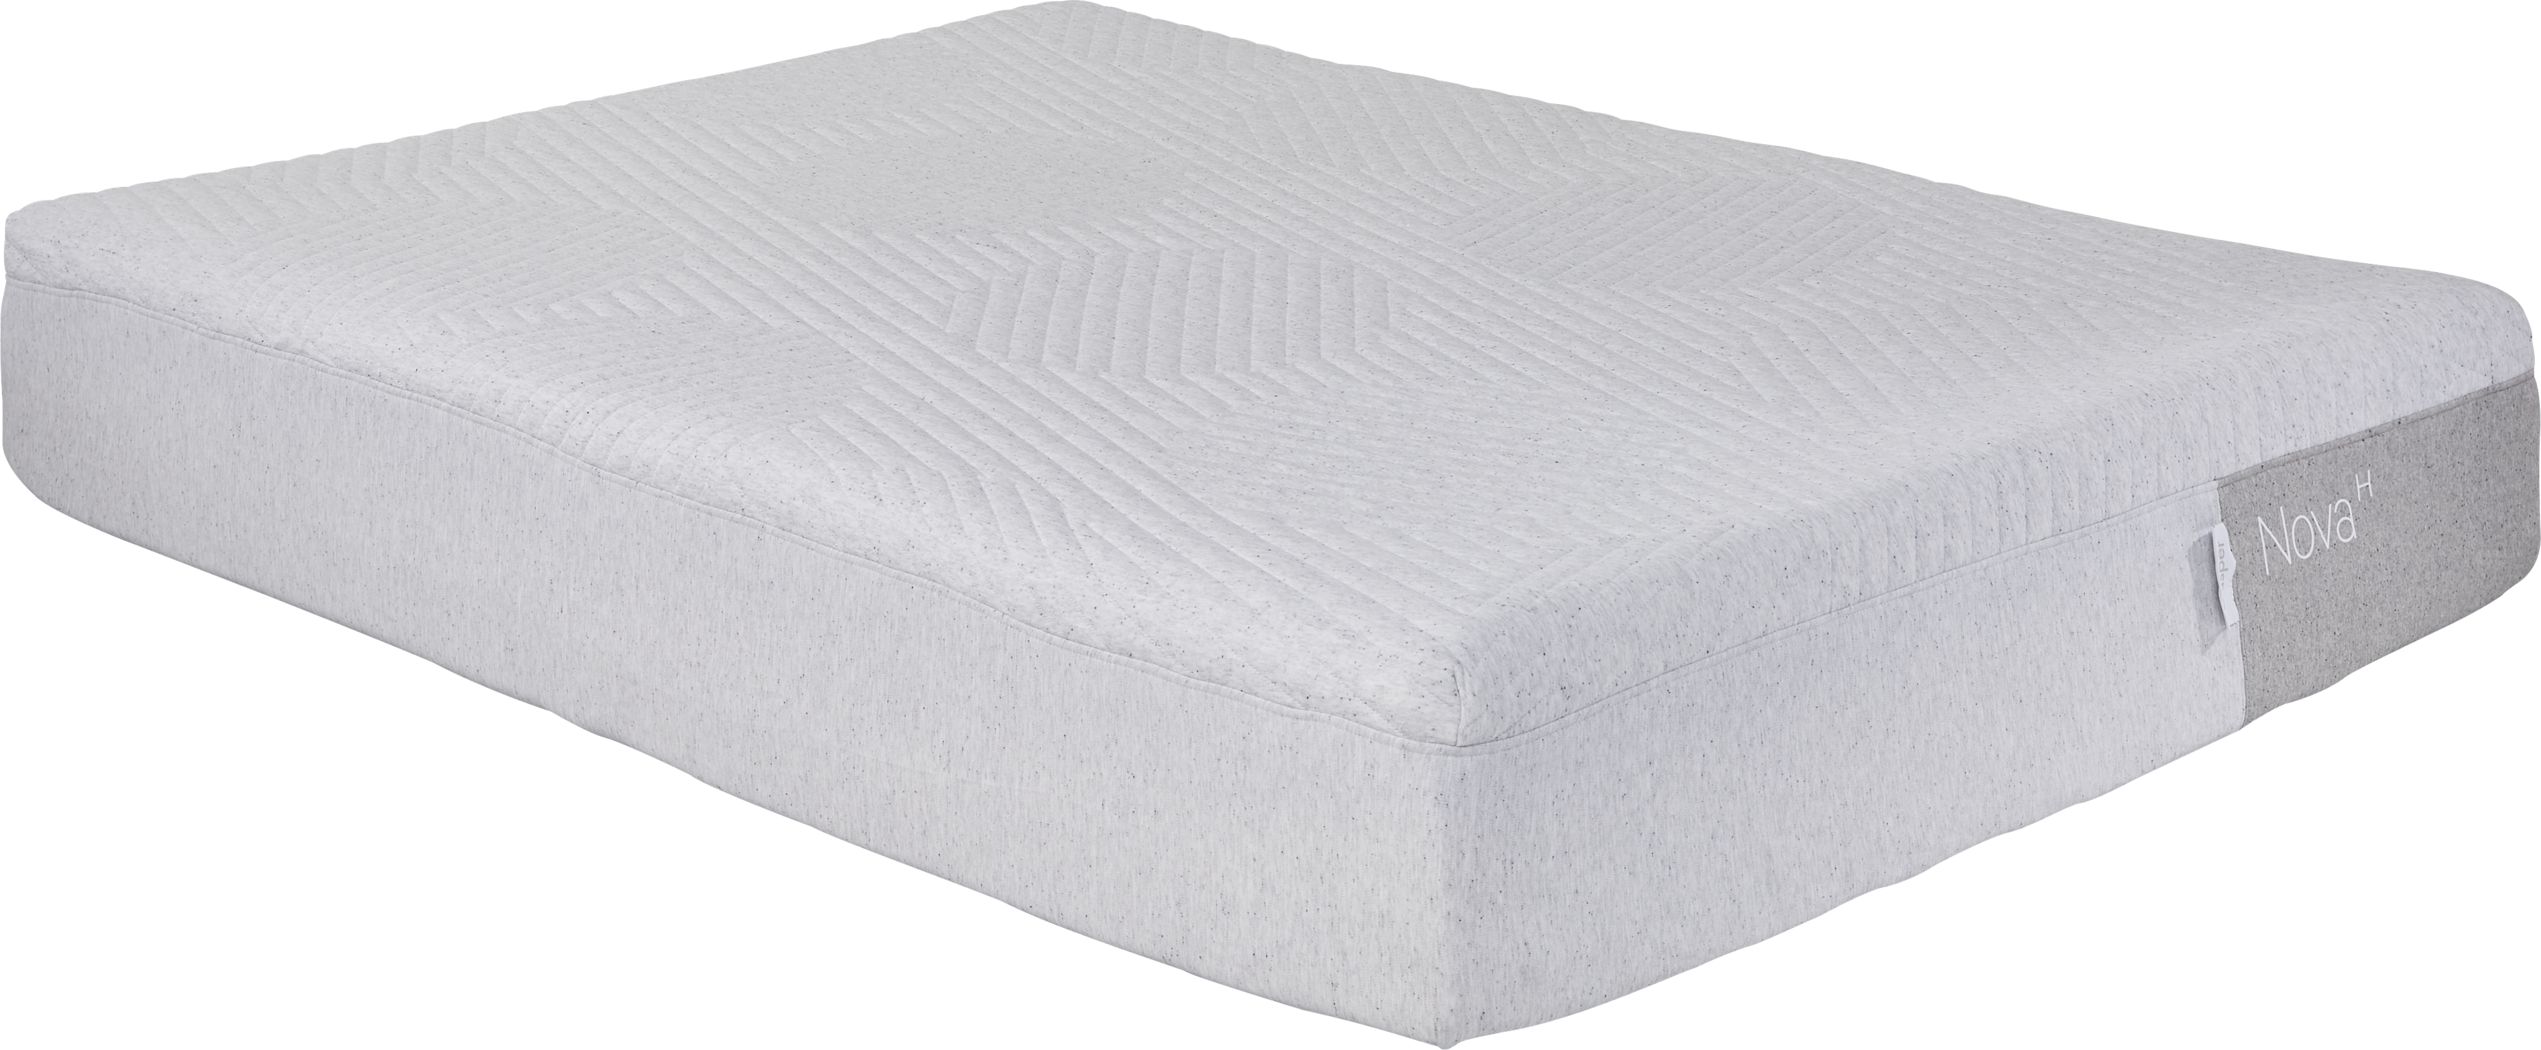 casper hybrid mattress king plush